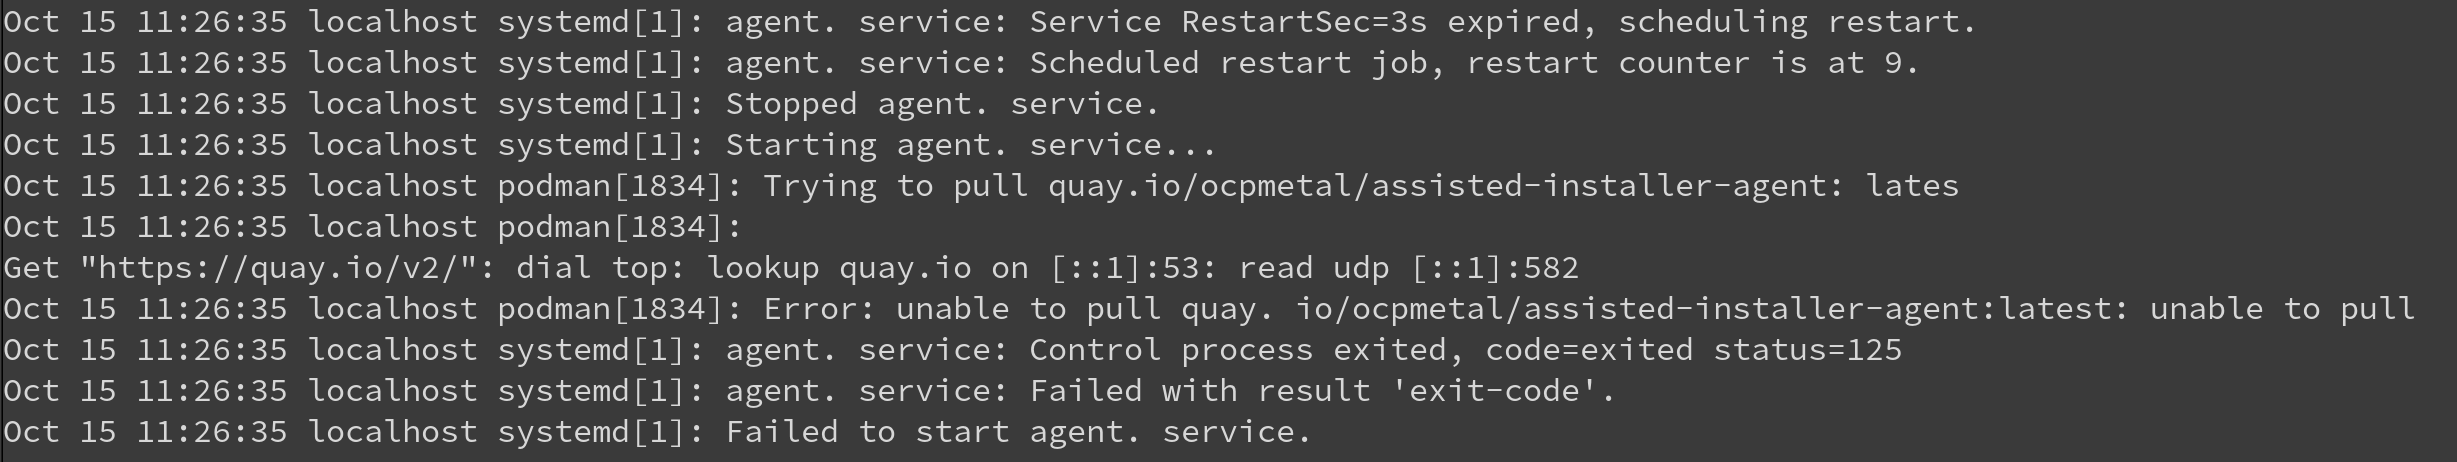 screenshot of agent service log